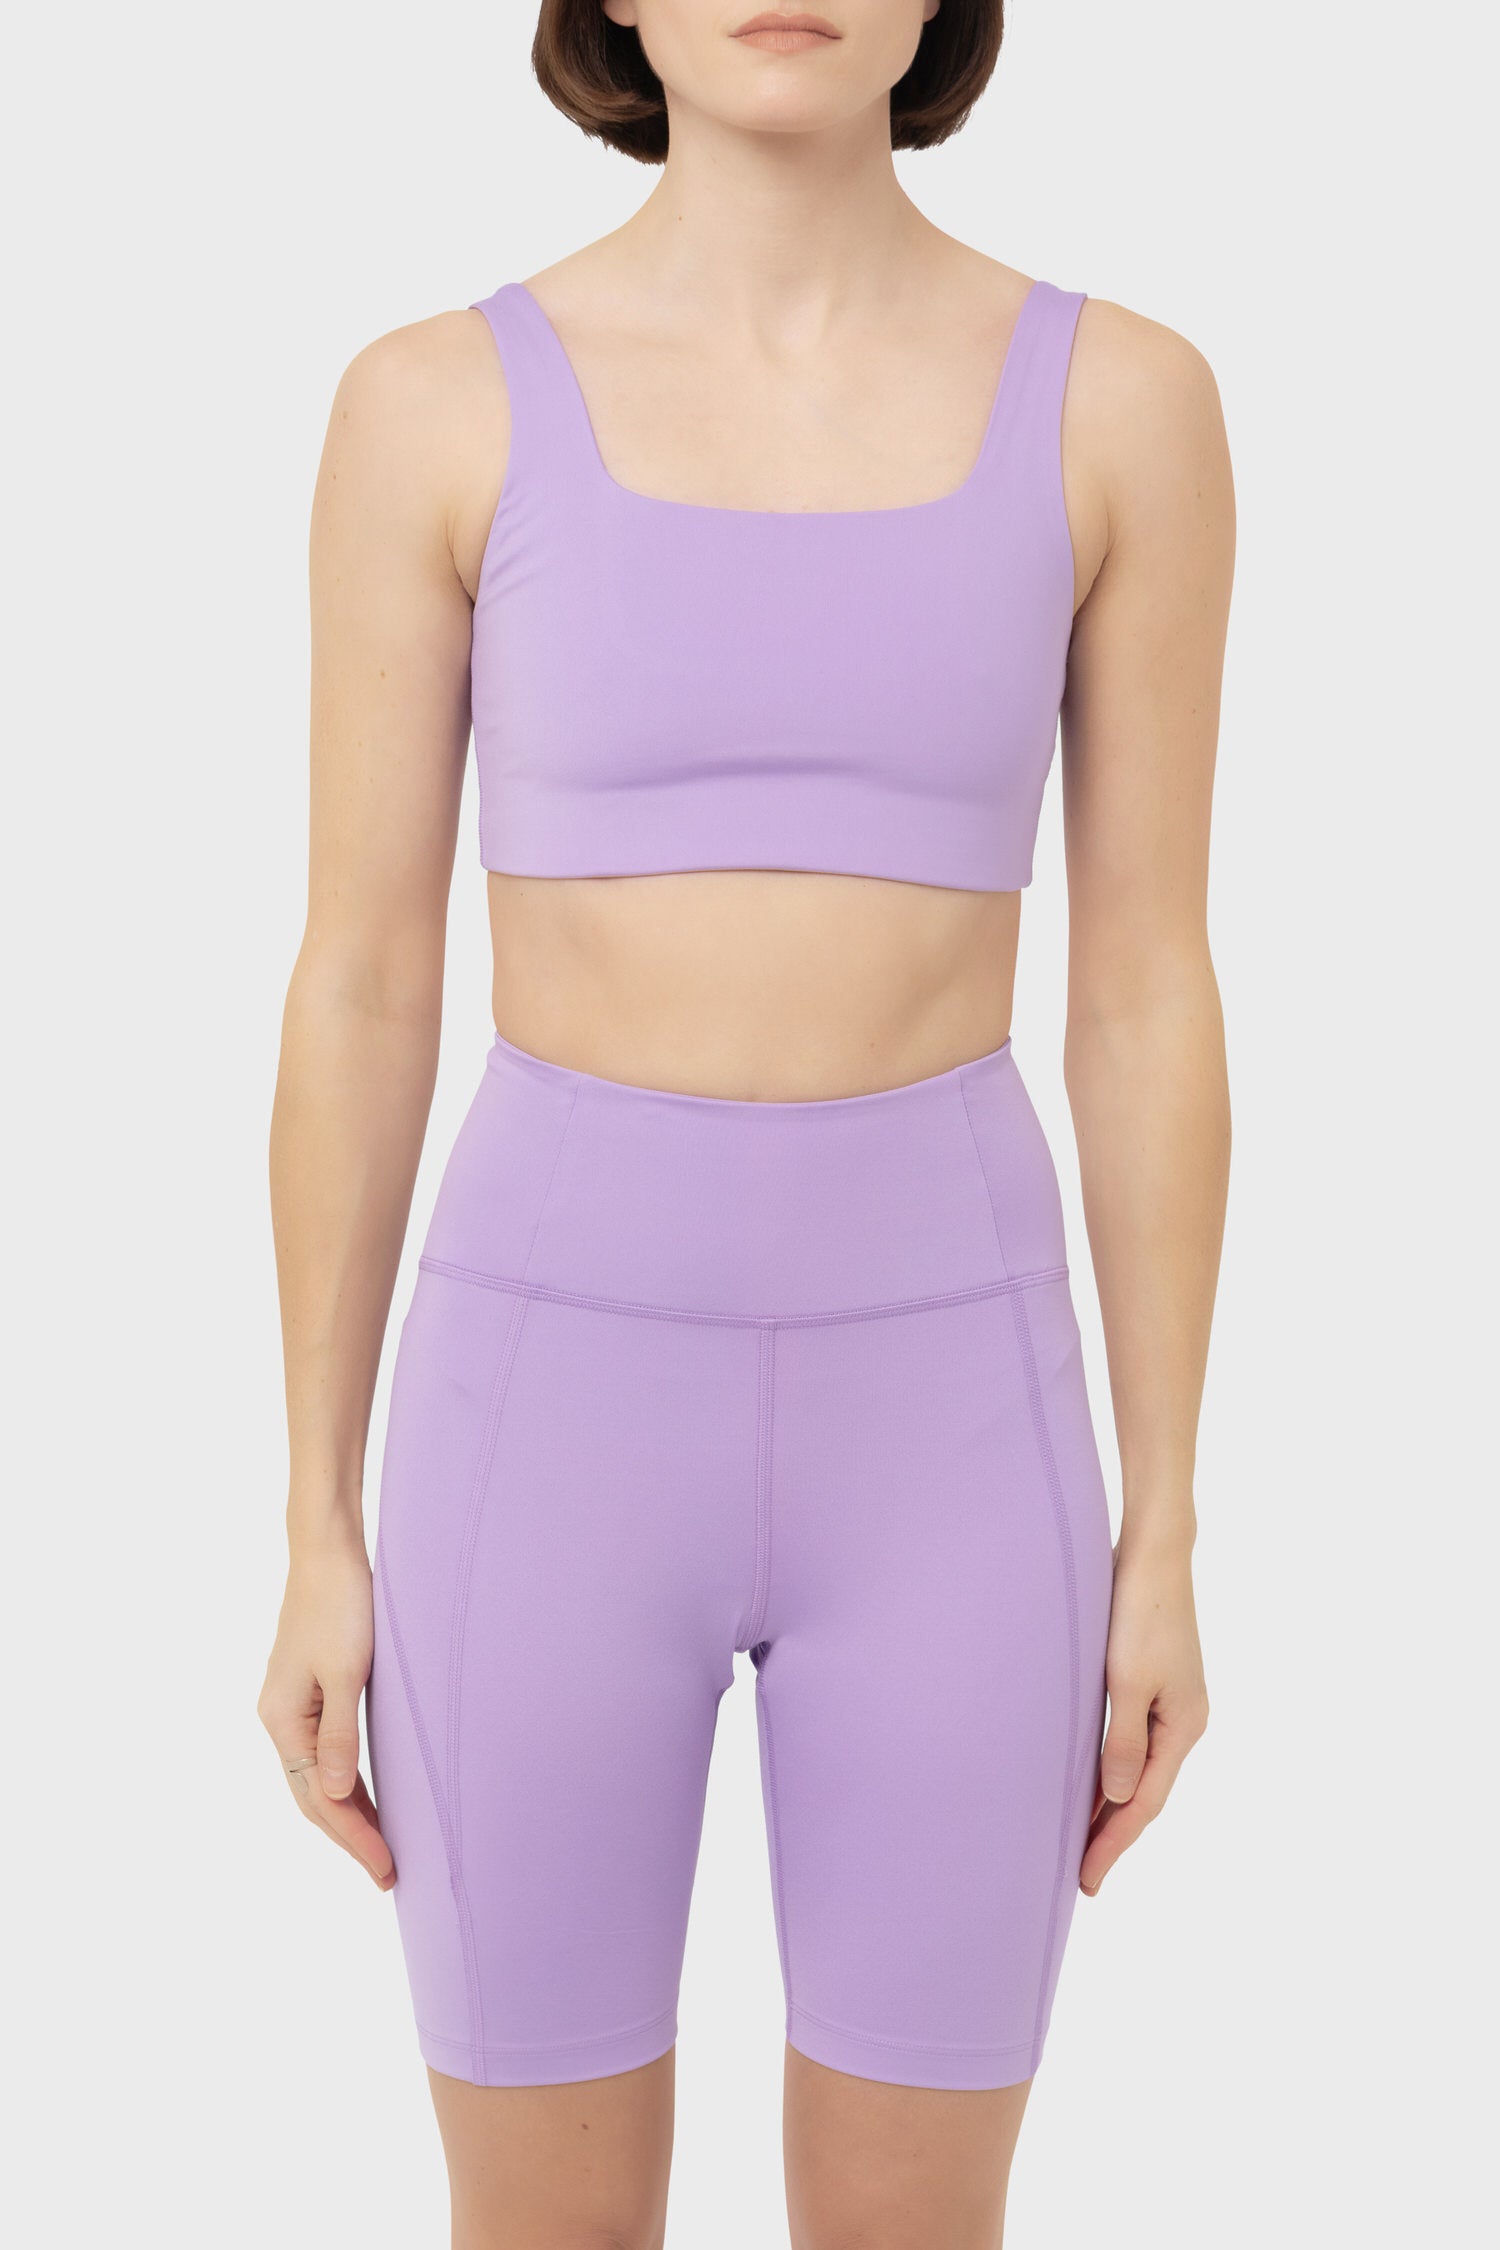 Girlfriend Collective TOMMY SQUARE NECK - Medium support sports bra - plum/purple  